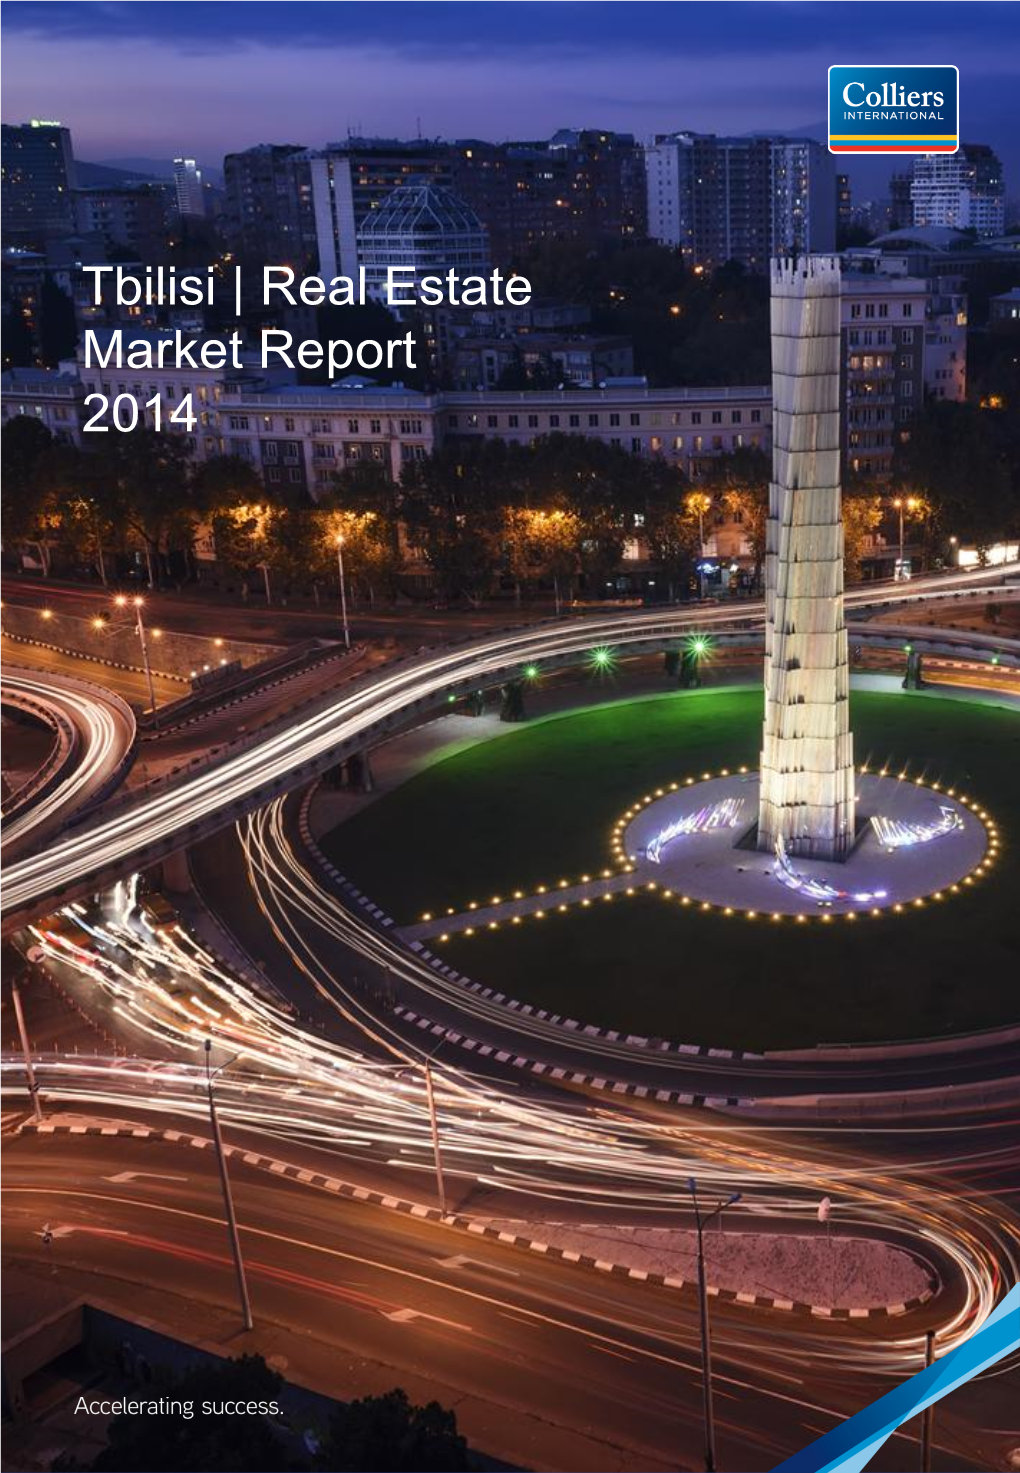 Tbilisi | Real Estate Market Report 2014 Contents